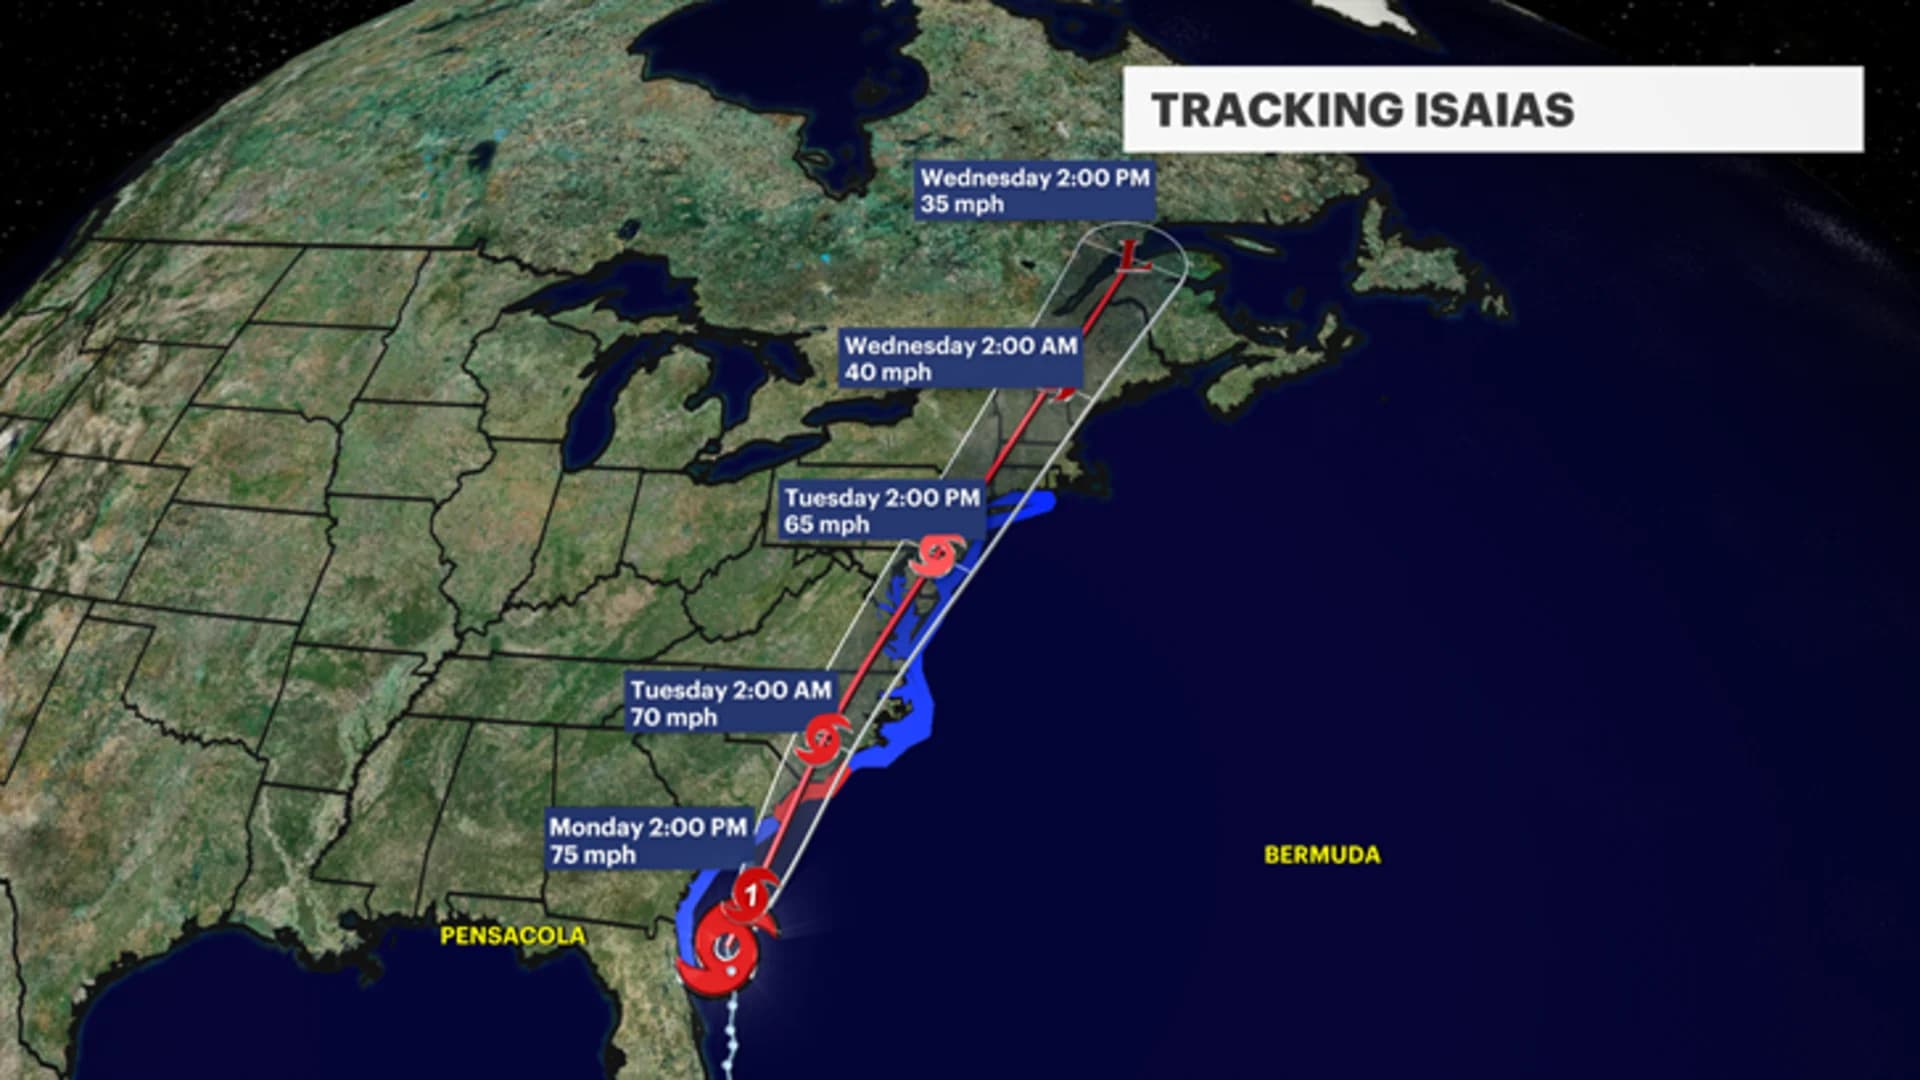 PHOTOS: Tracking Isaias' path